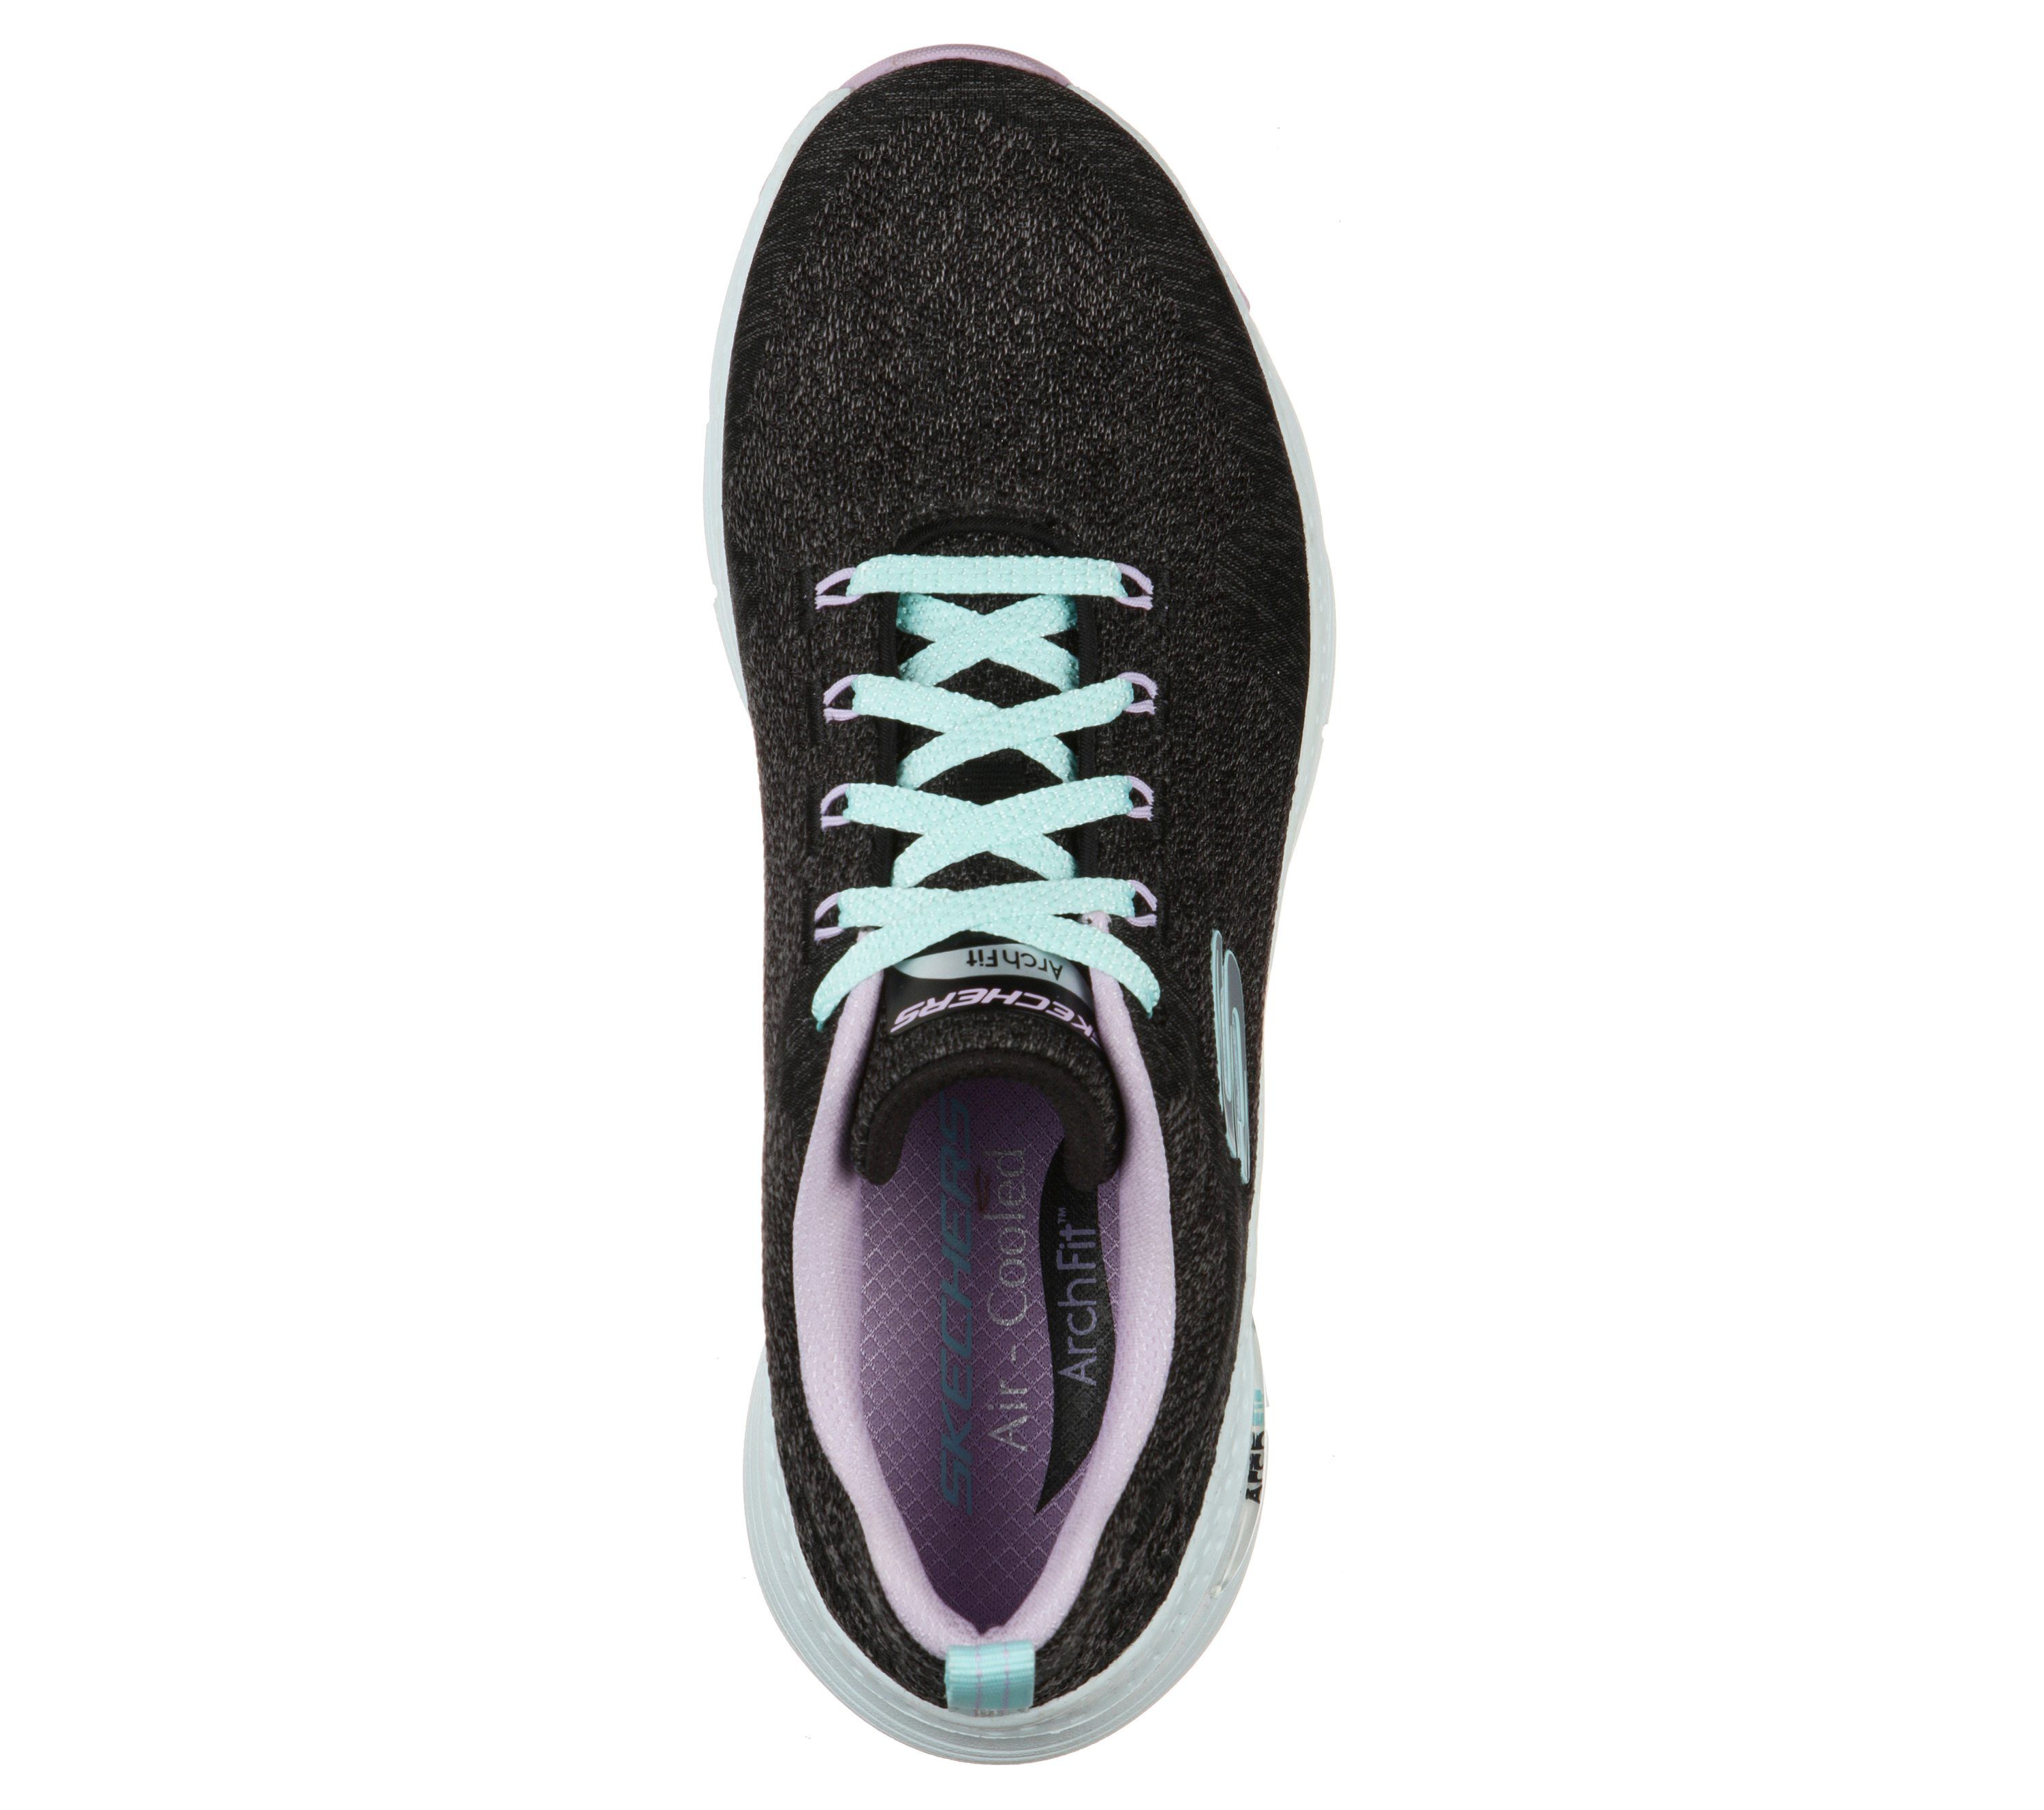 Skechers Arch Fit - Comfy Wave - Black / Violet Textile